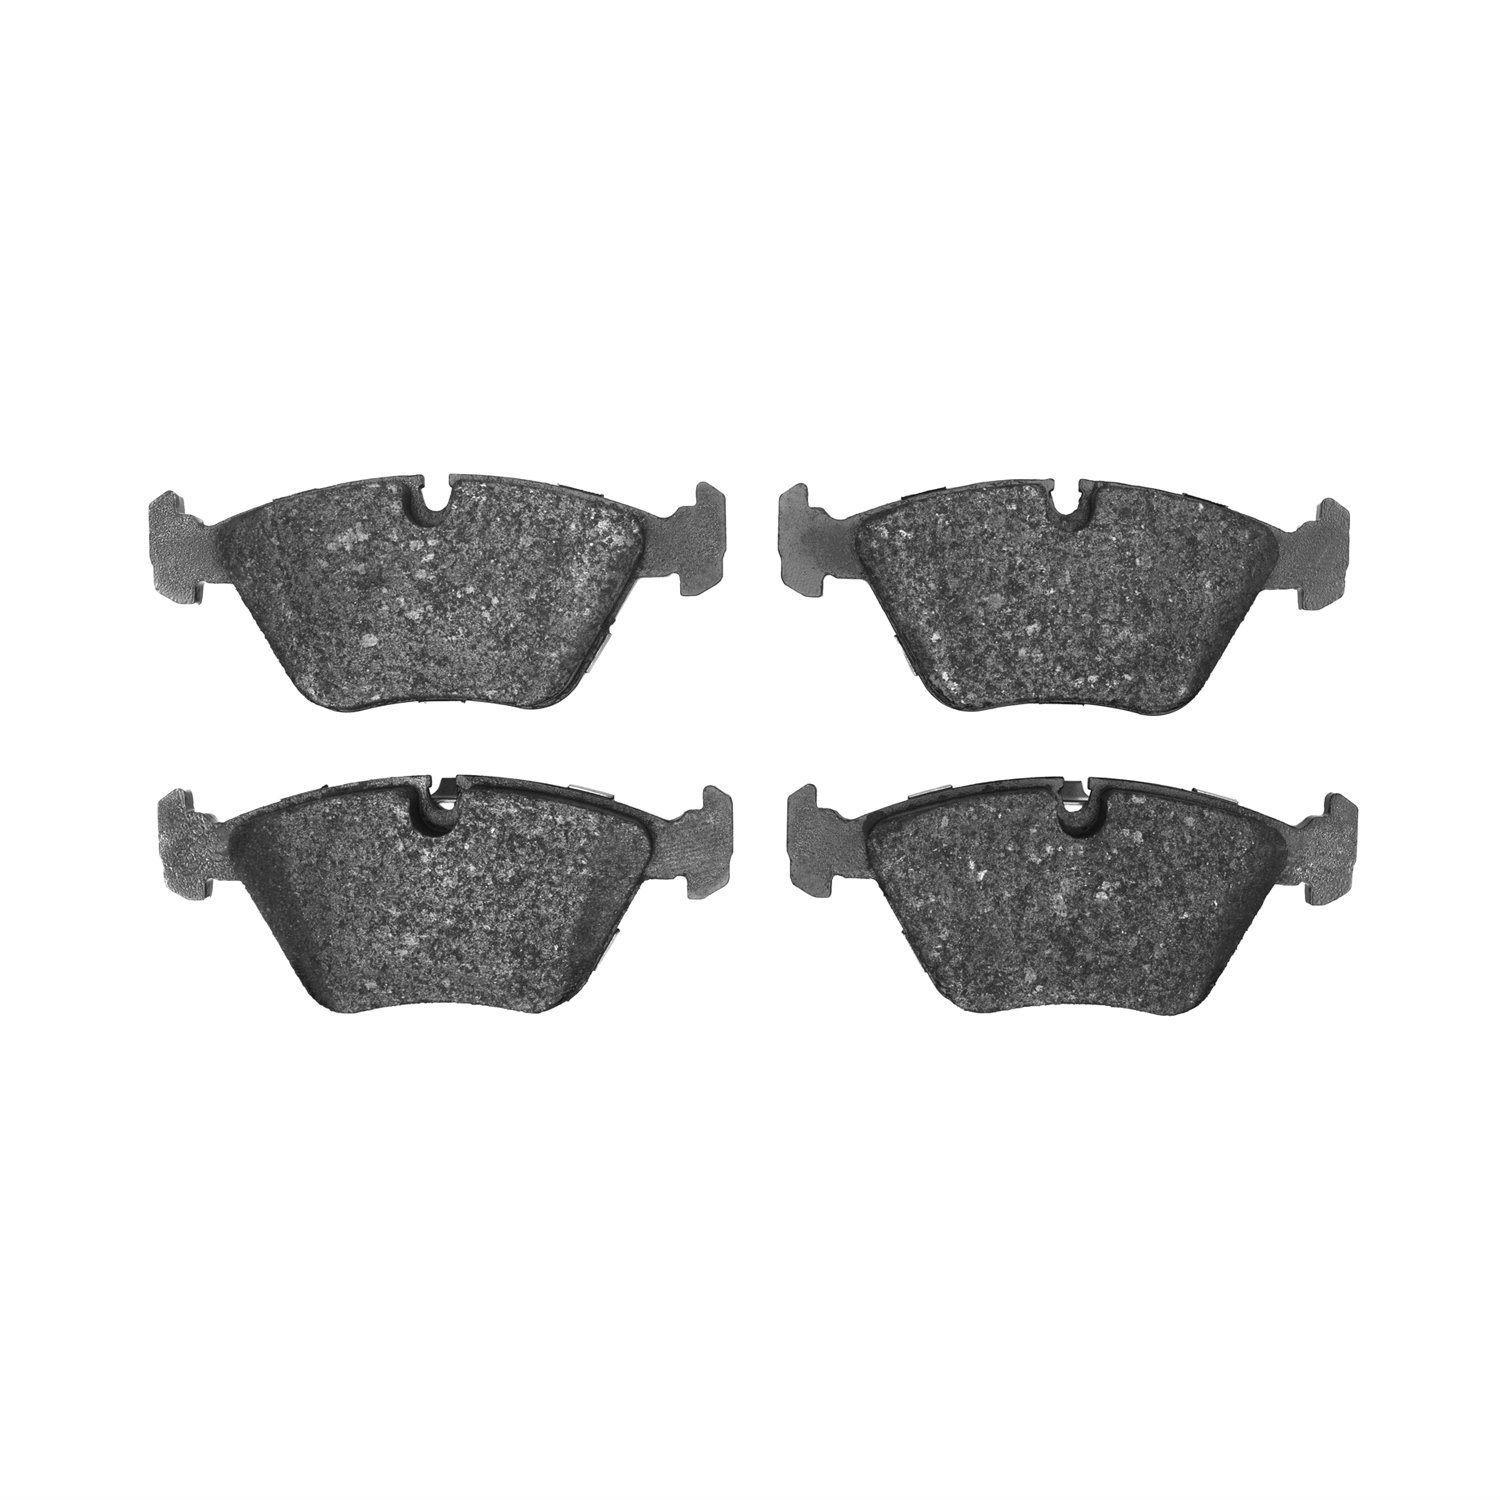 Euro Ceramic Brake Pads, 1989-2006 Fits Multiple Makes/Models, Position: Front